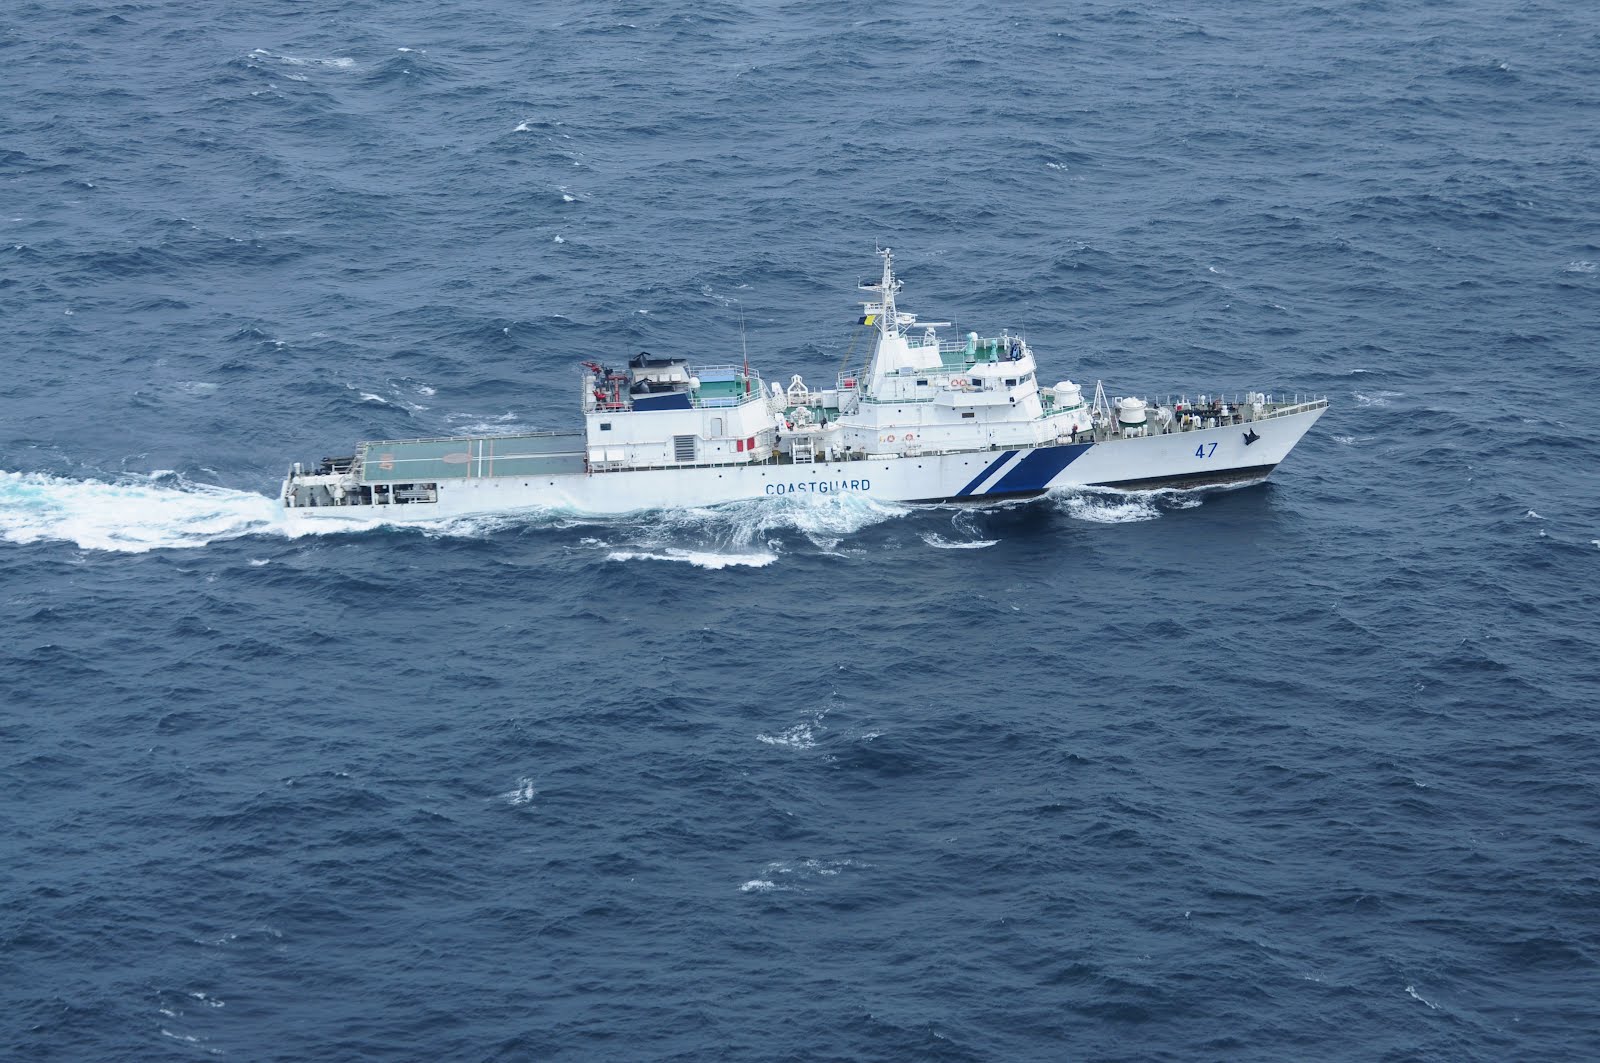 An_Advanced_Offshore_Patrol_Vessel_on_high_seas.JPG